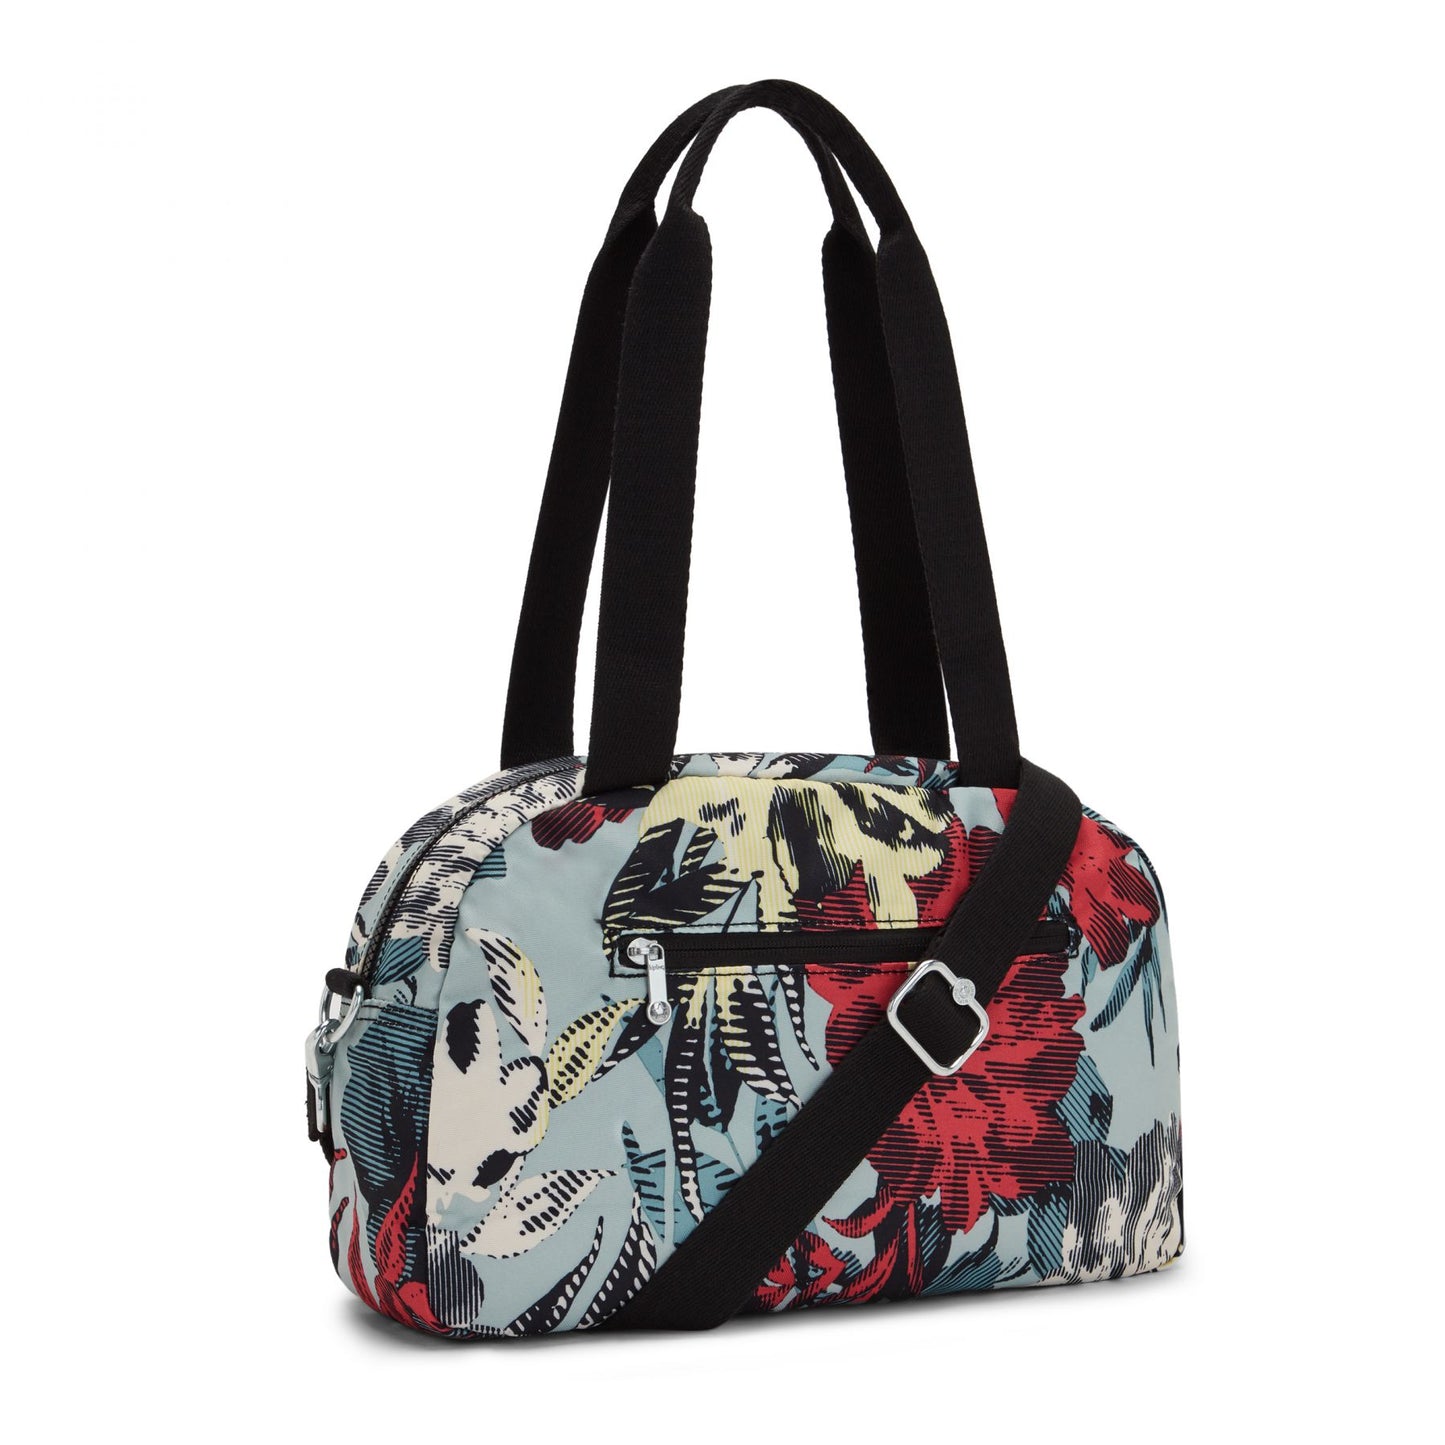 Kipling Cool Defea Shoulder Bag in Casual Flower Print